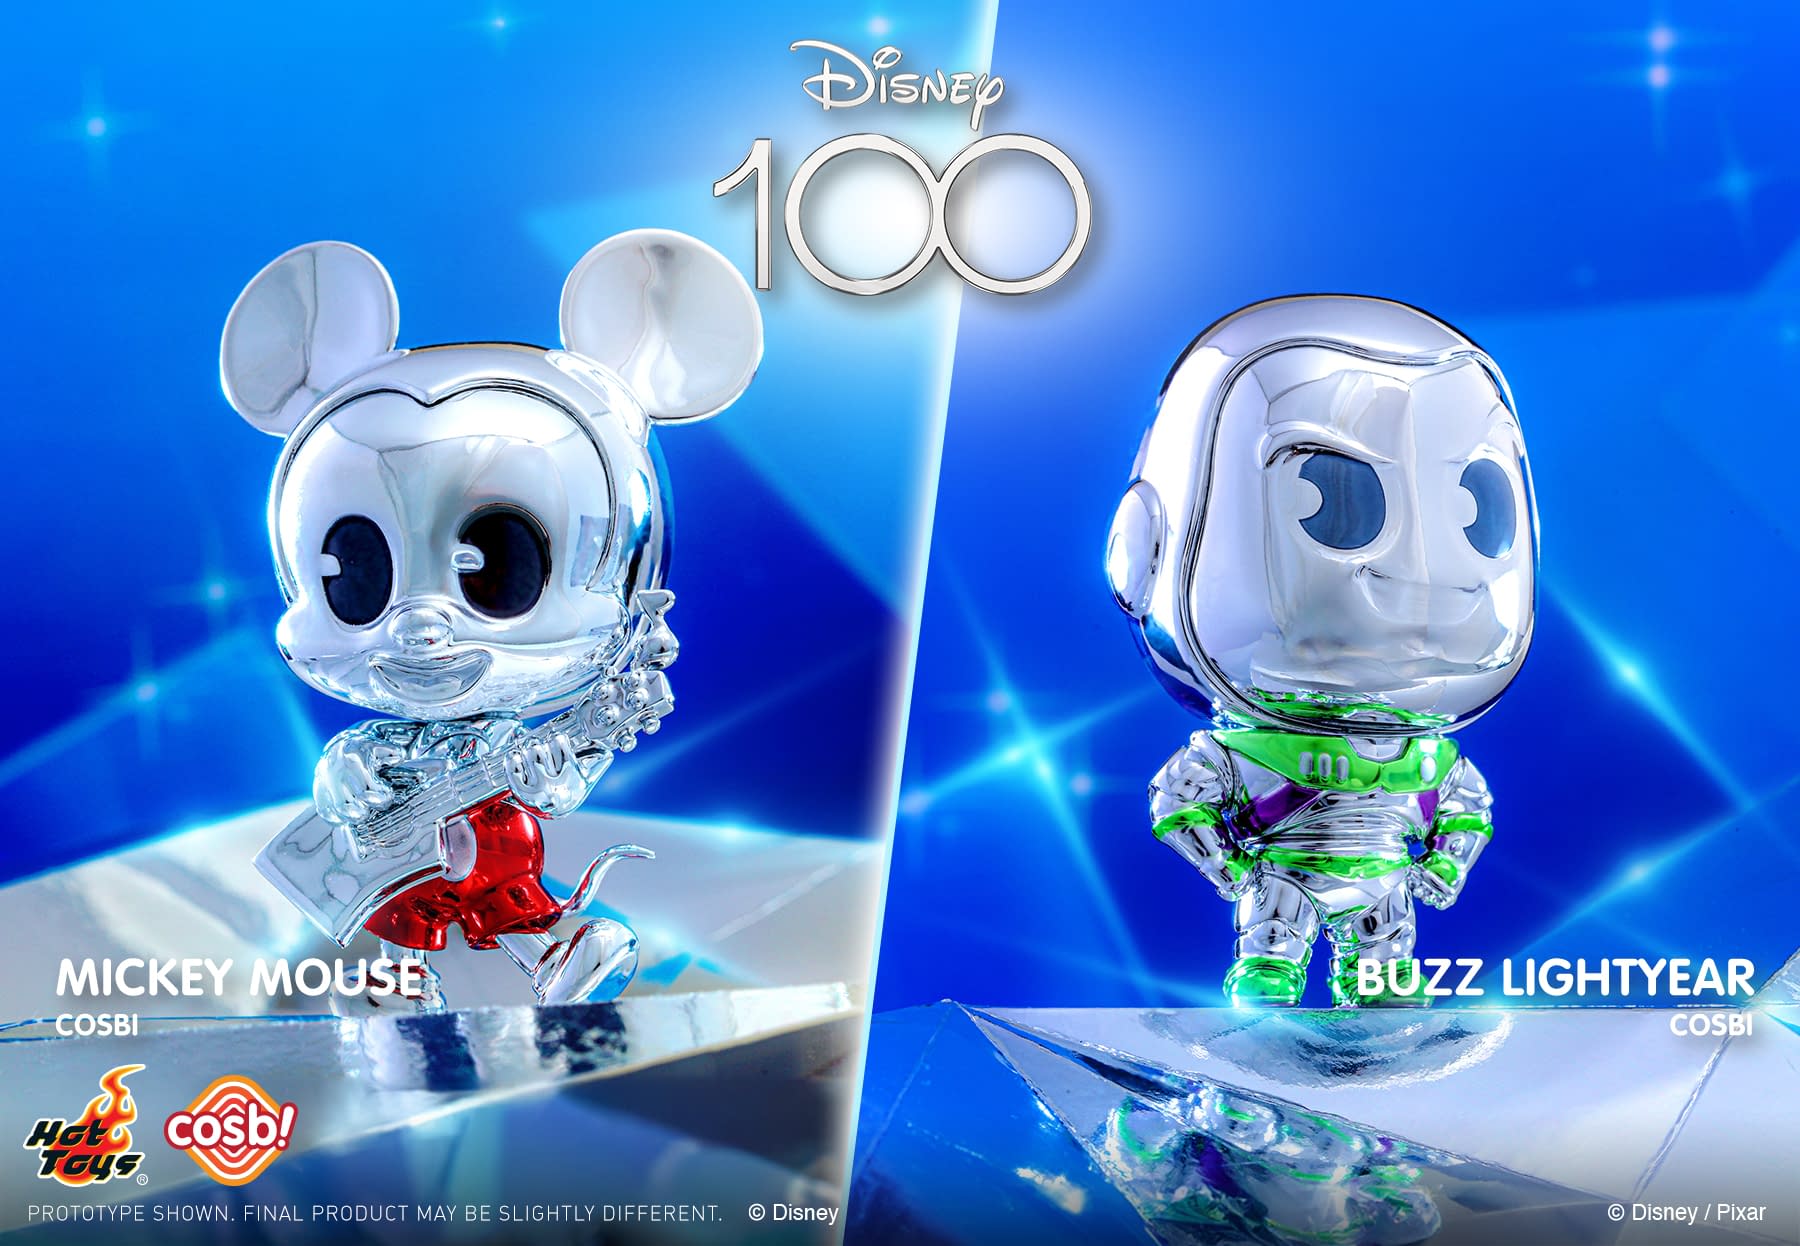 Hot Toys Unveils New Disney 100 Platinum Color Cosbi Collection2